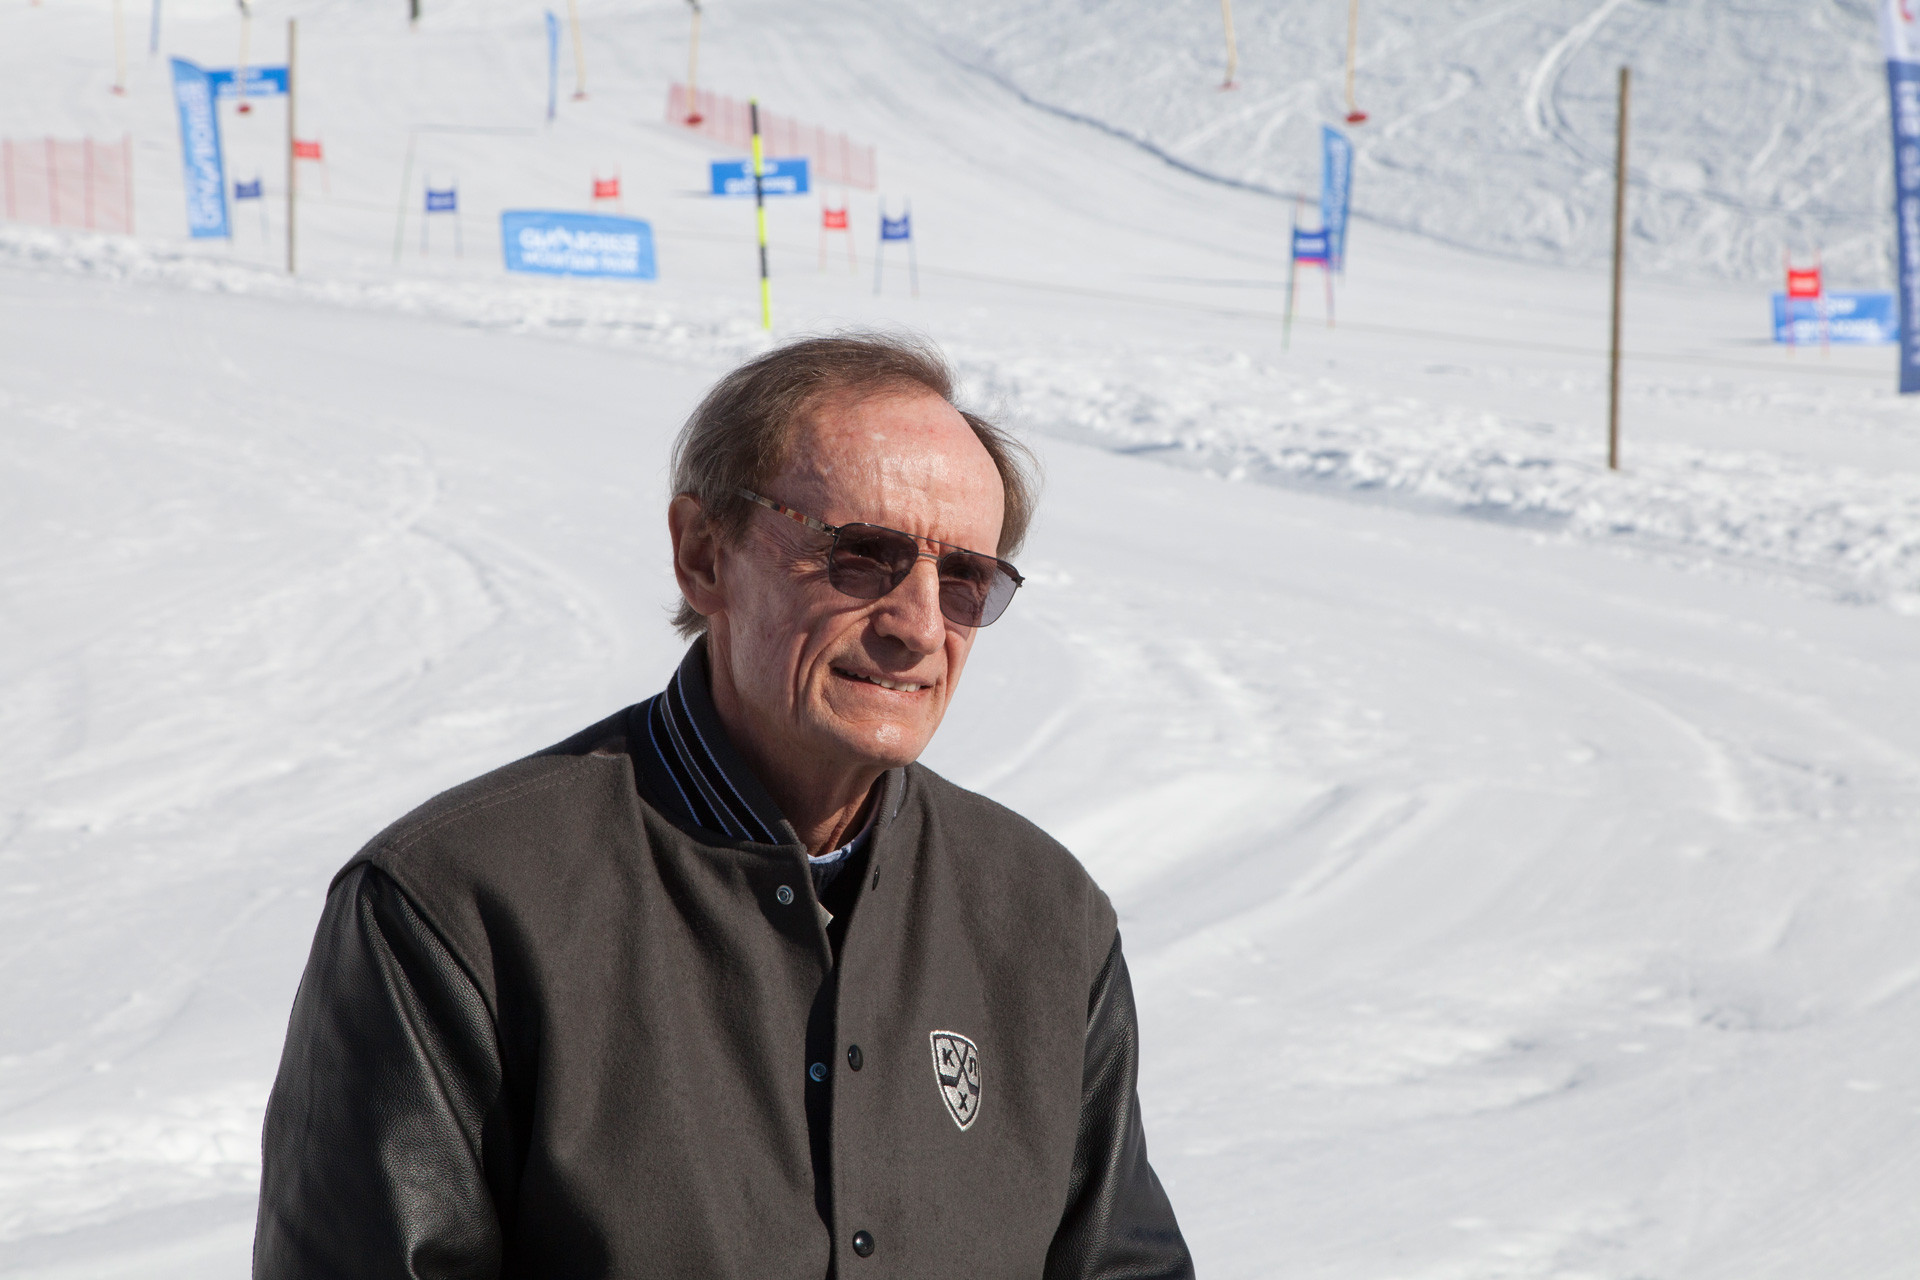 Jean-claude Killy champion JO 1968 50 ans jeux olympiques station ski montagne grenoble isère alpes france